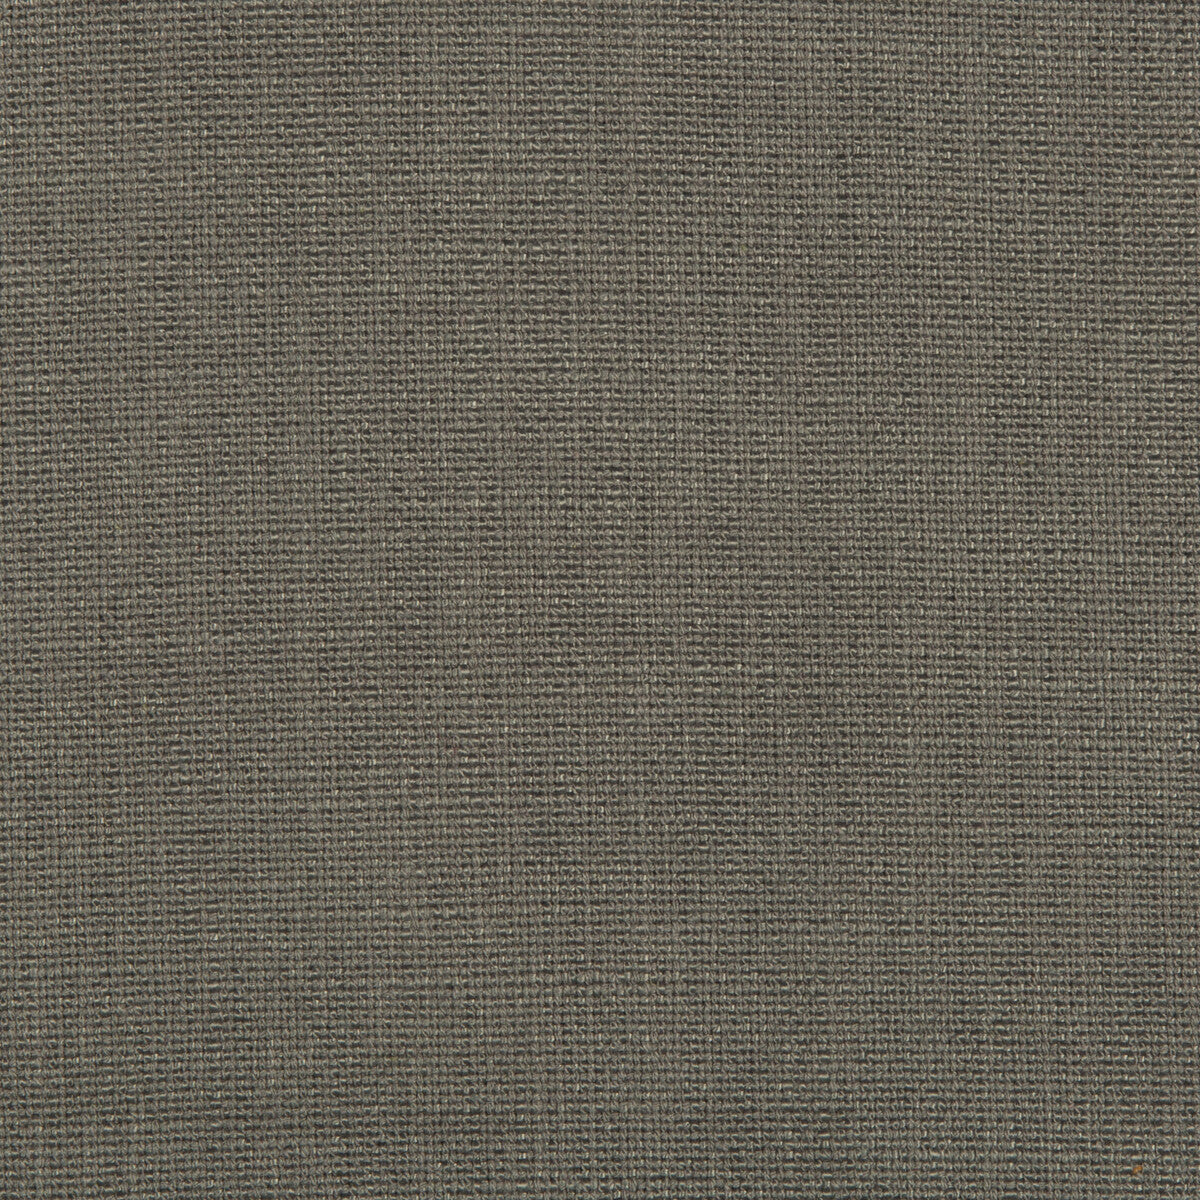 Kravet Smart fabric in 35226-1121 color - pattern 35226.1121.0 - by Kravet Smart in the Performance Kravetarmor collection